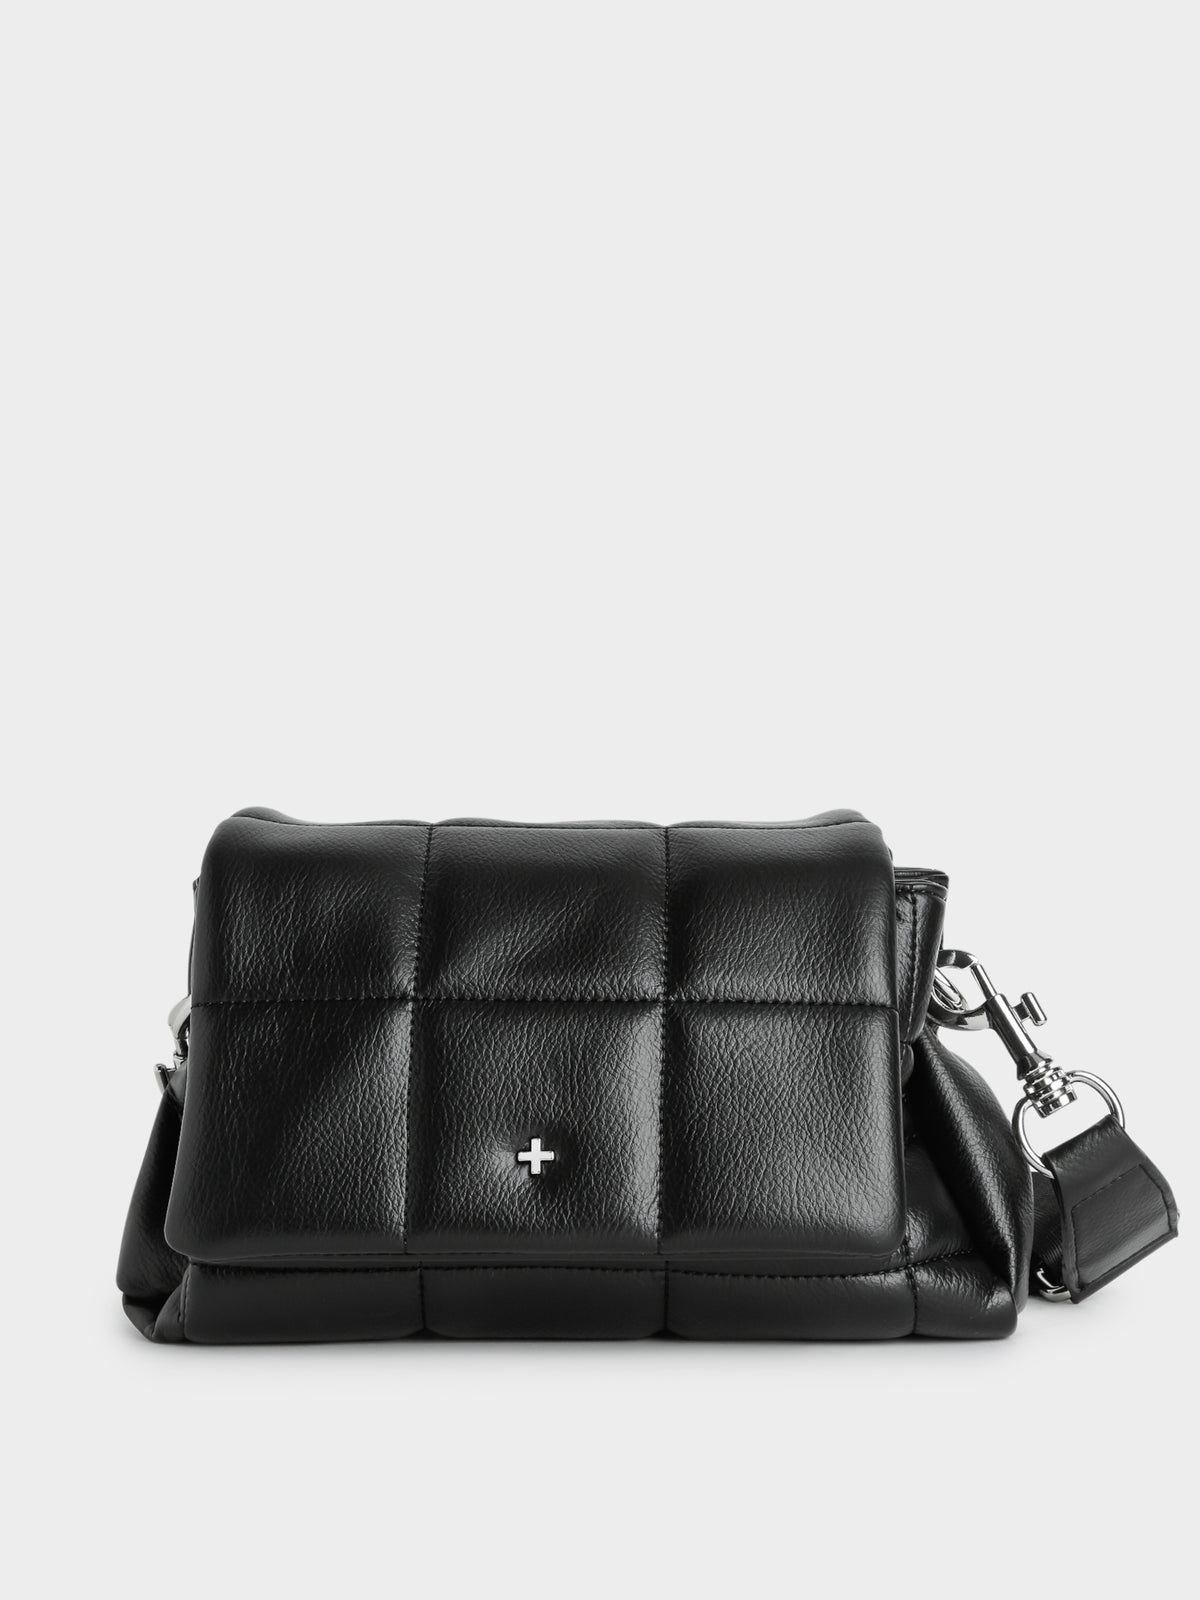 Vegas Handbag in Black